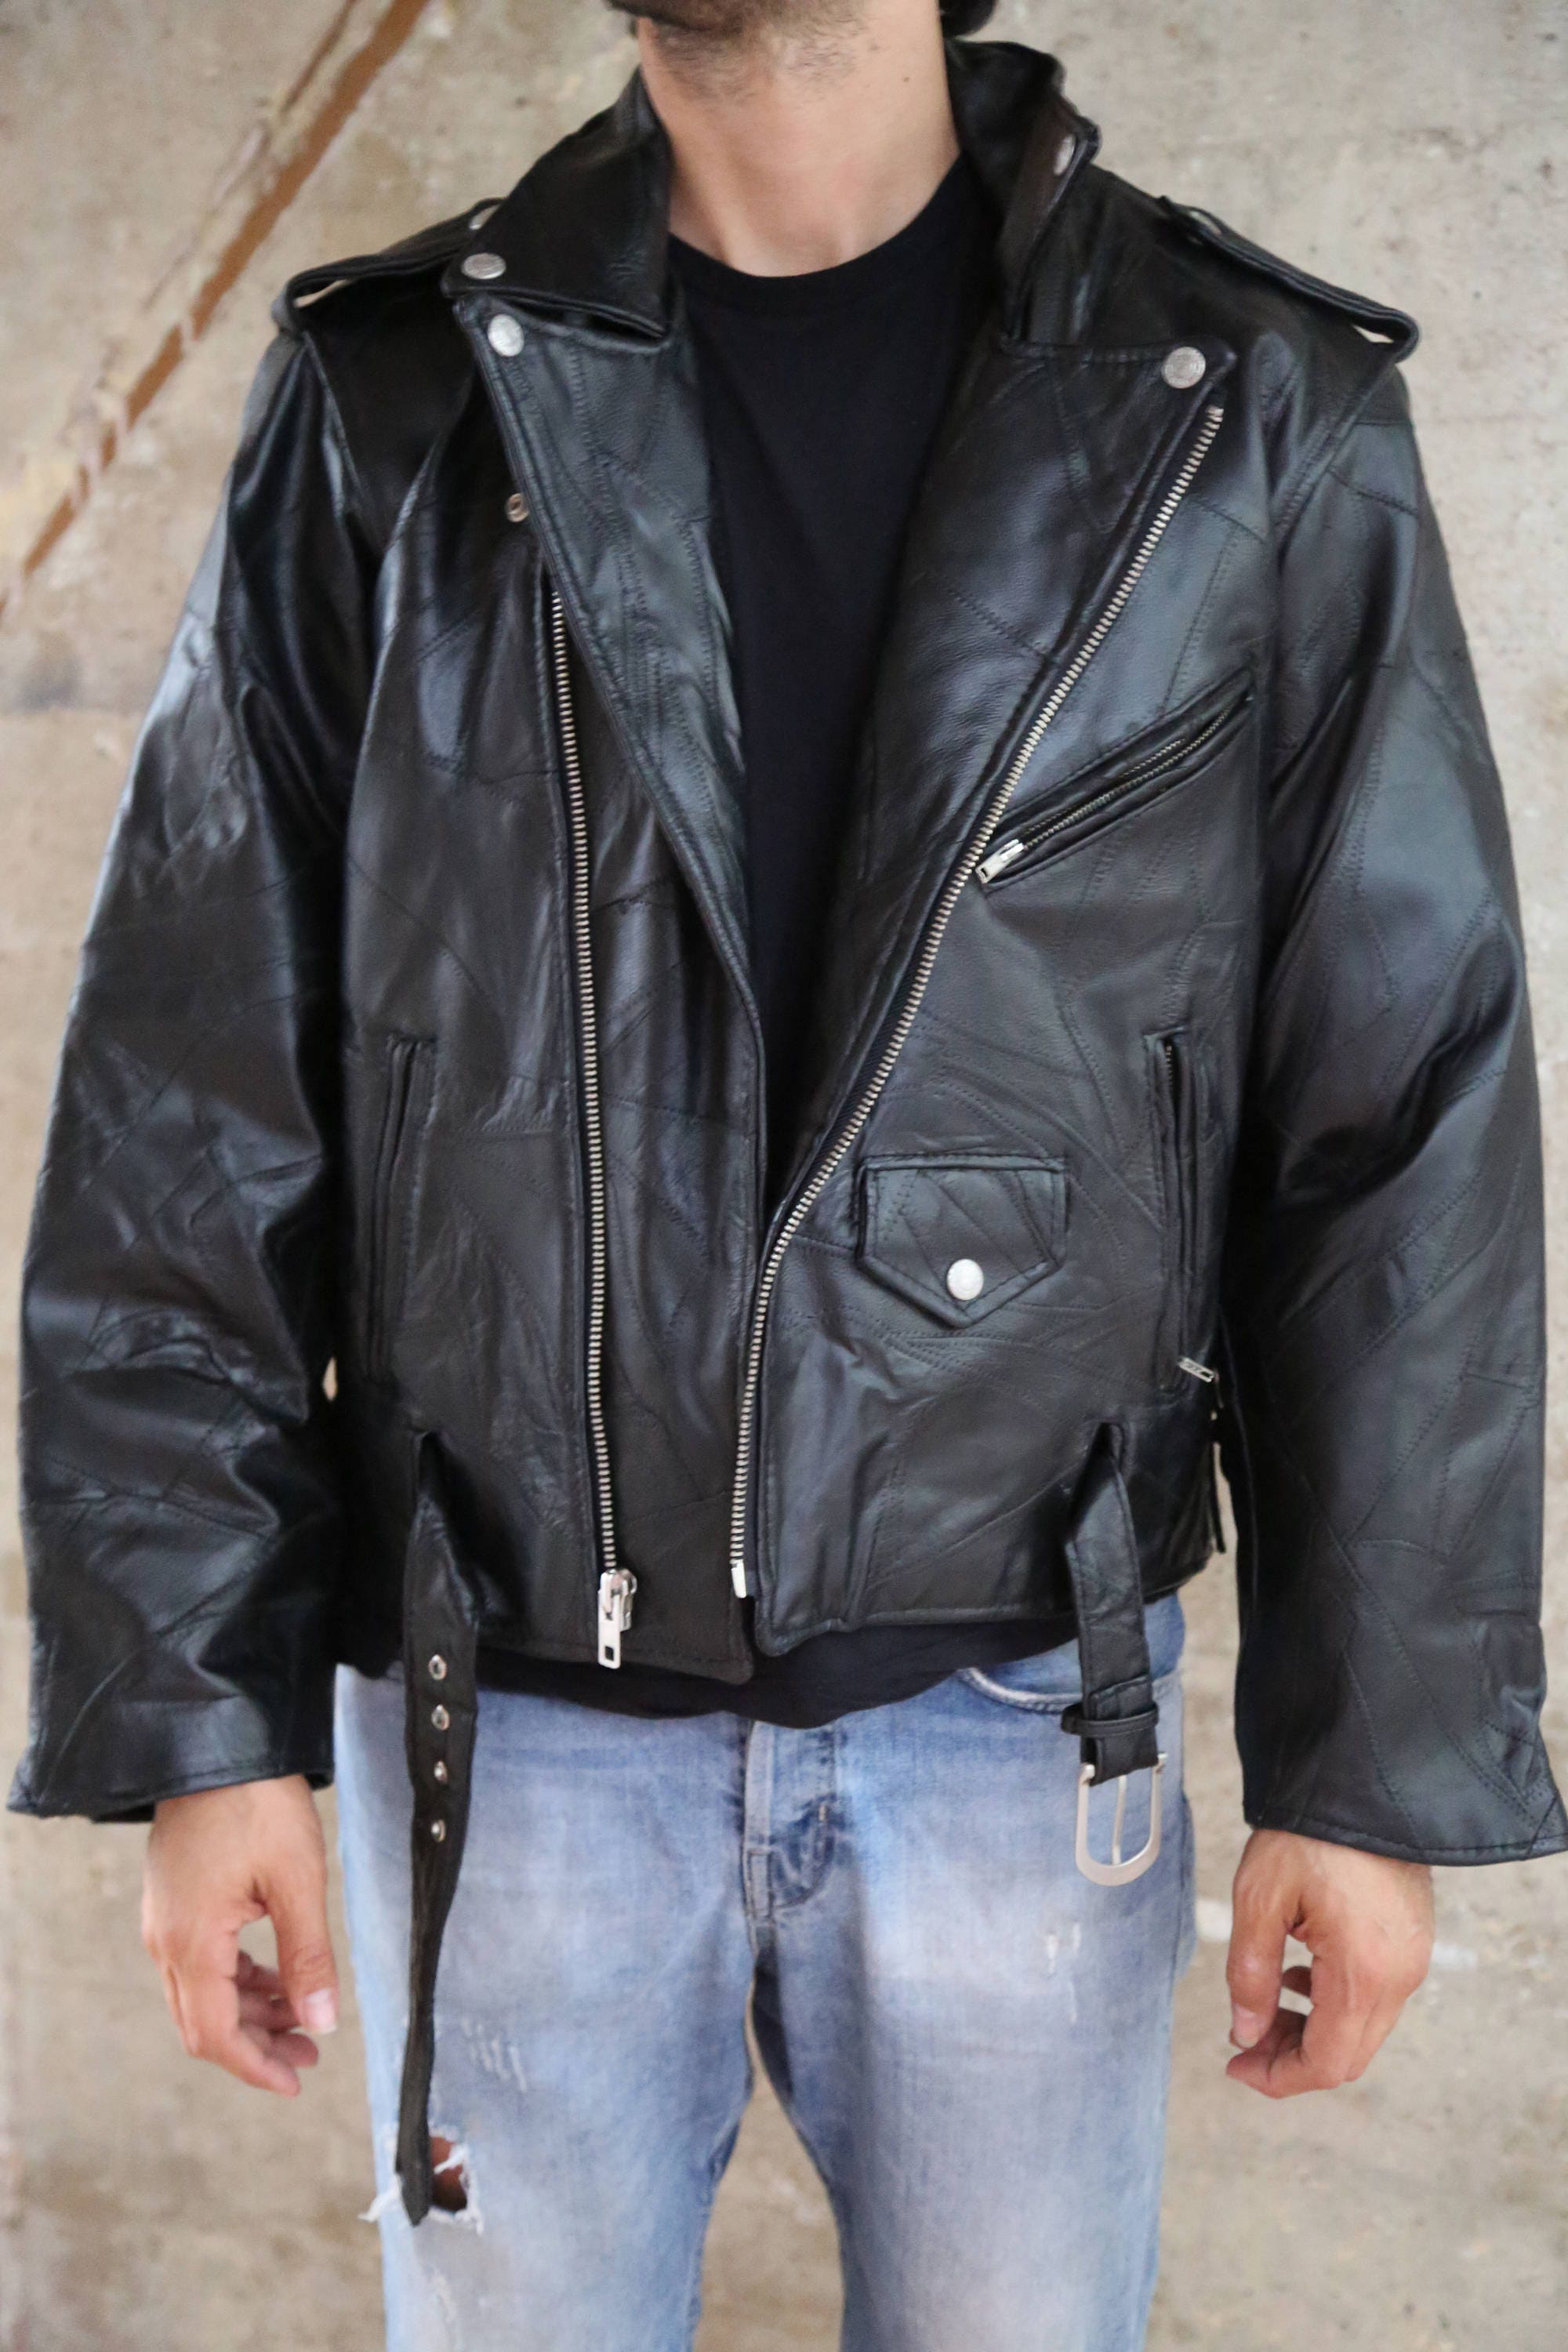 4X Diamond Plate Leather Motorcycle Jacket 